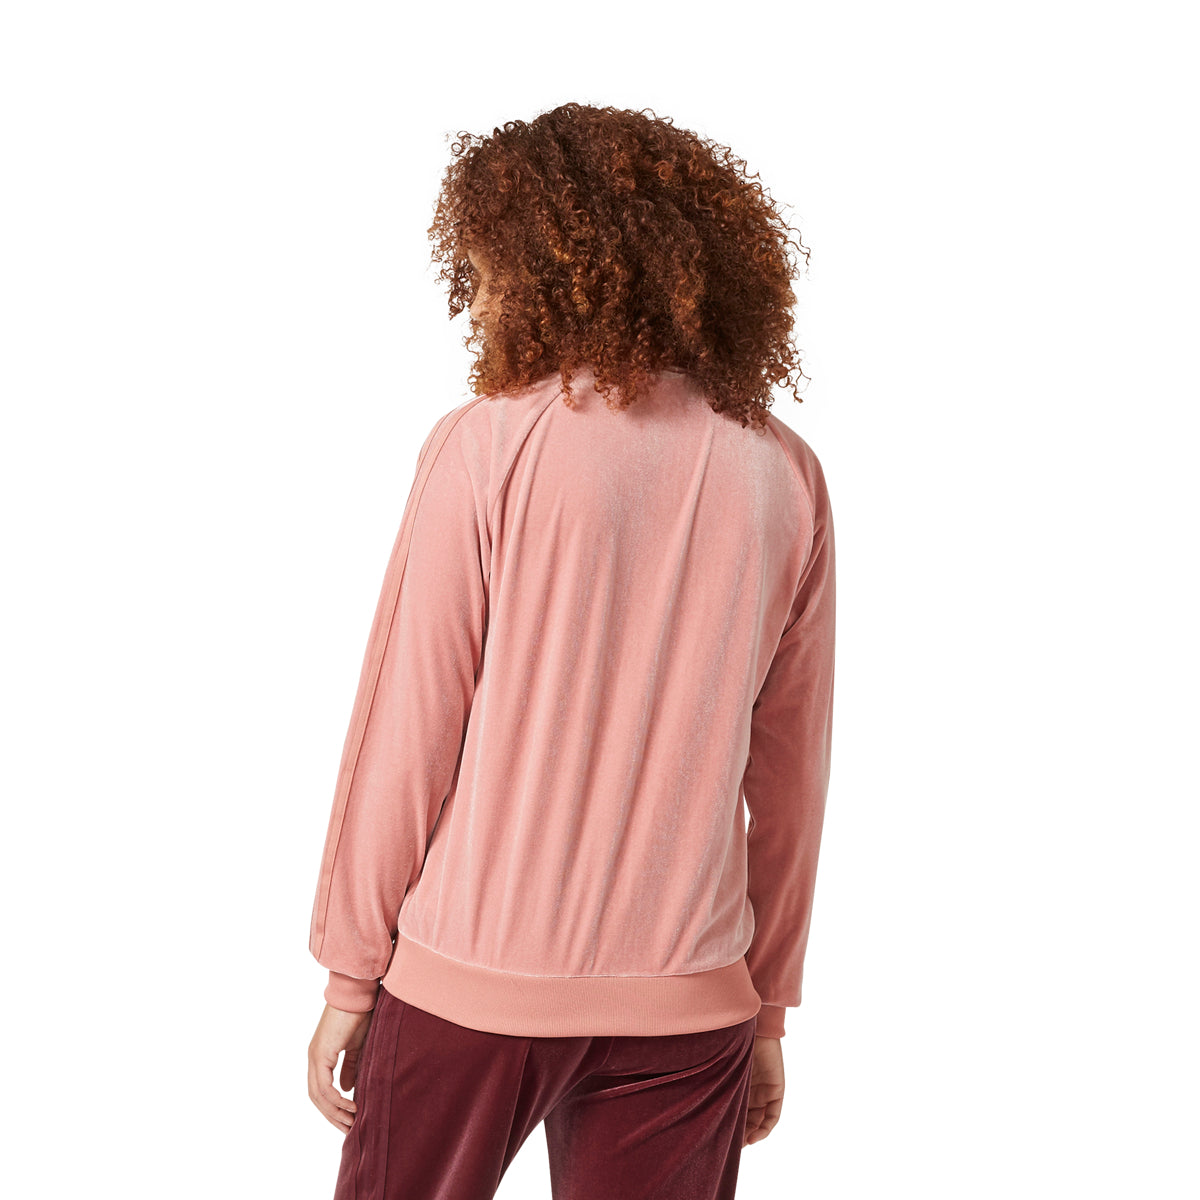 Dem narre kreativ Adidas Originals Velvet Vibes SST Track Jacket Women's Raw Pink